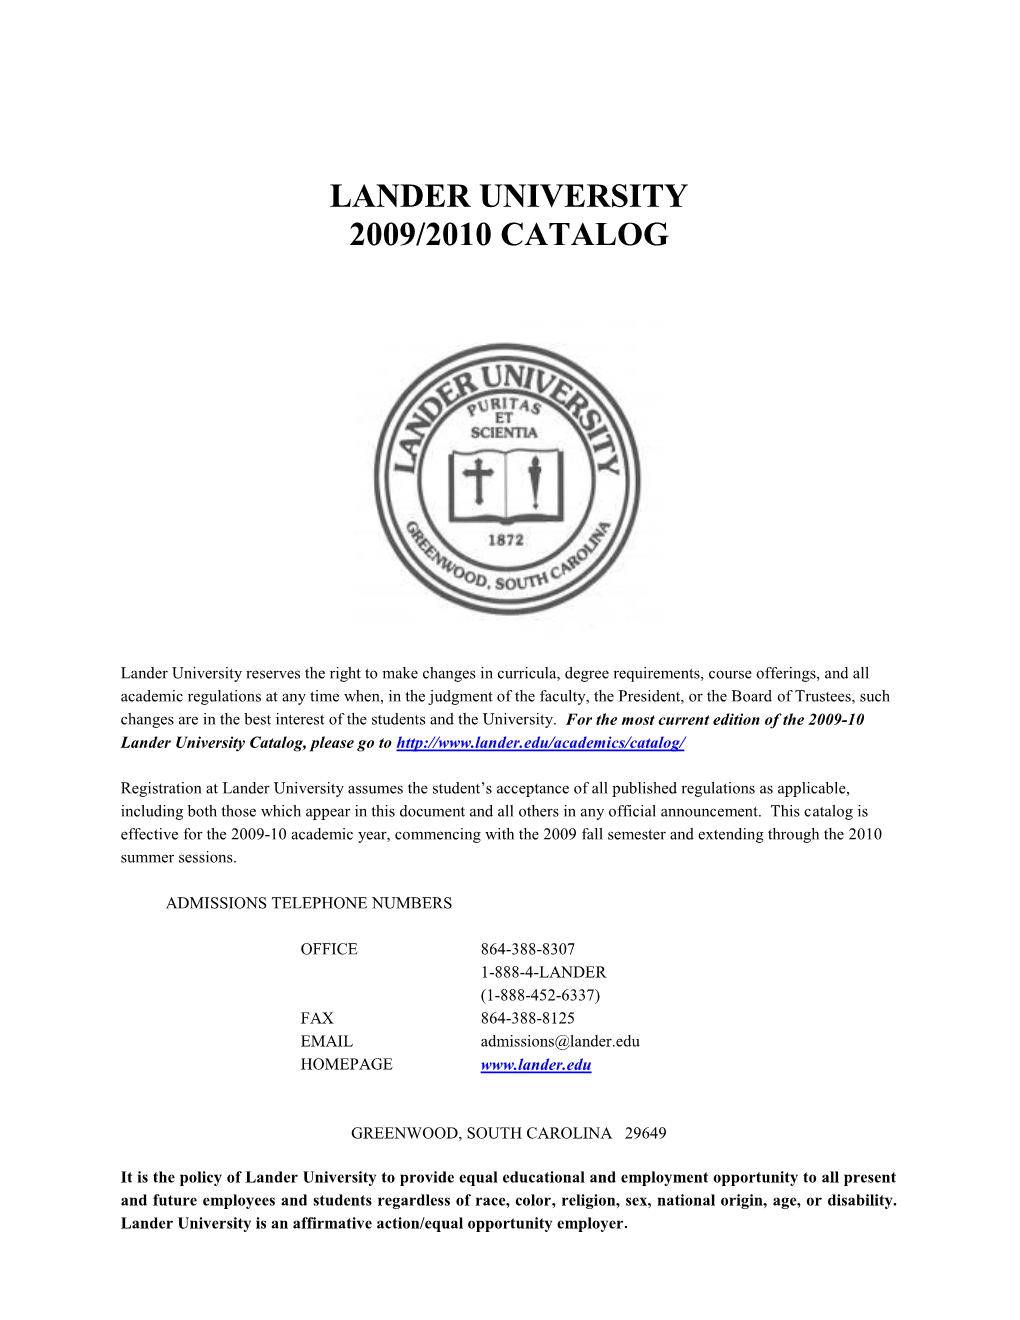 Lander University 2009/2010 Catalog